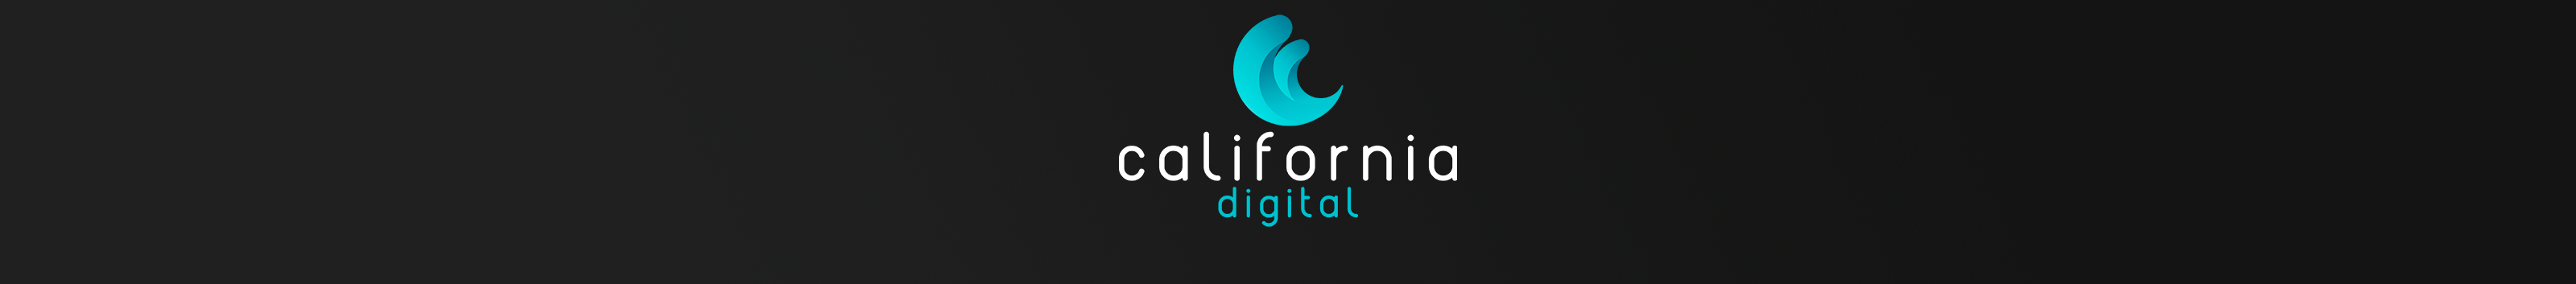 California Digital's profile banner